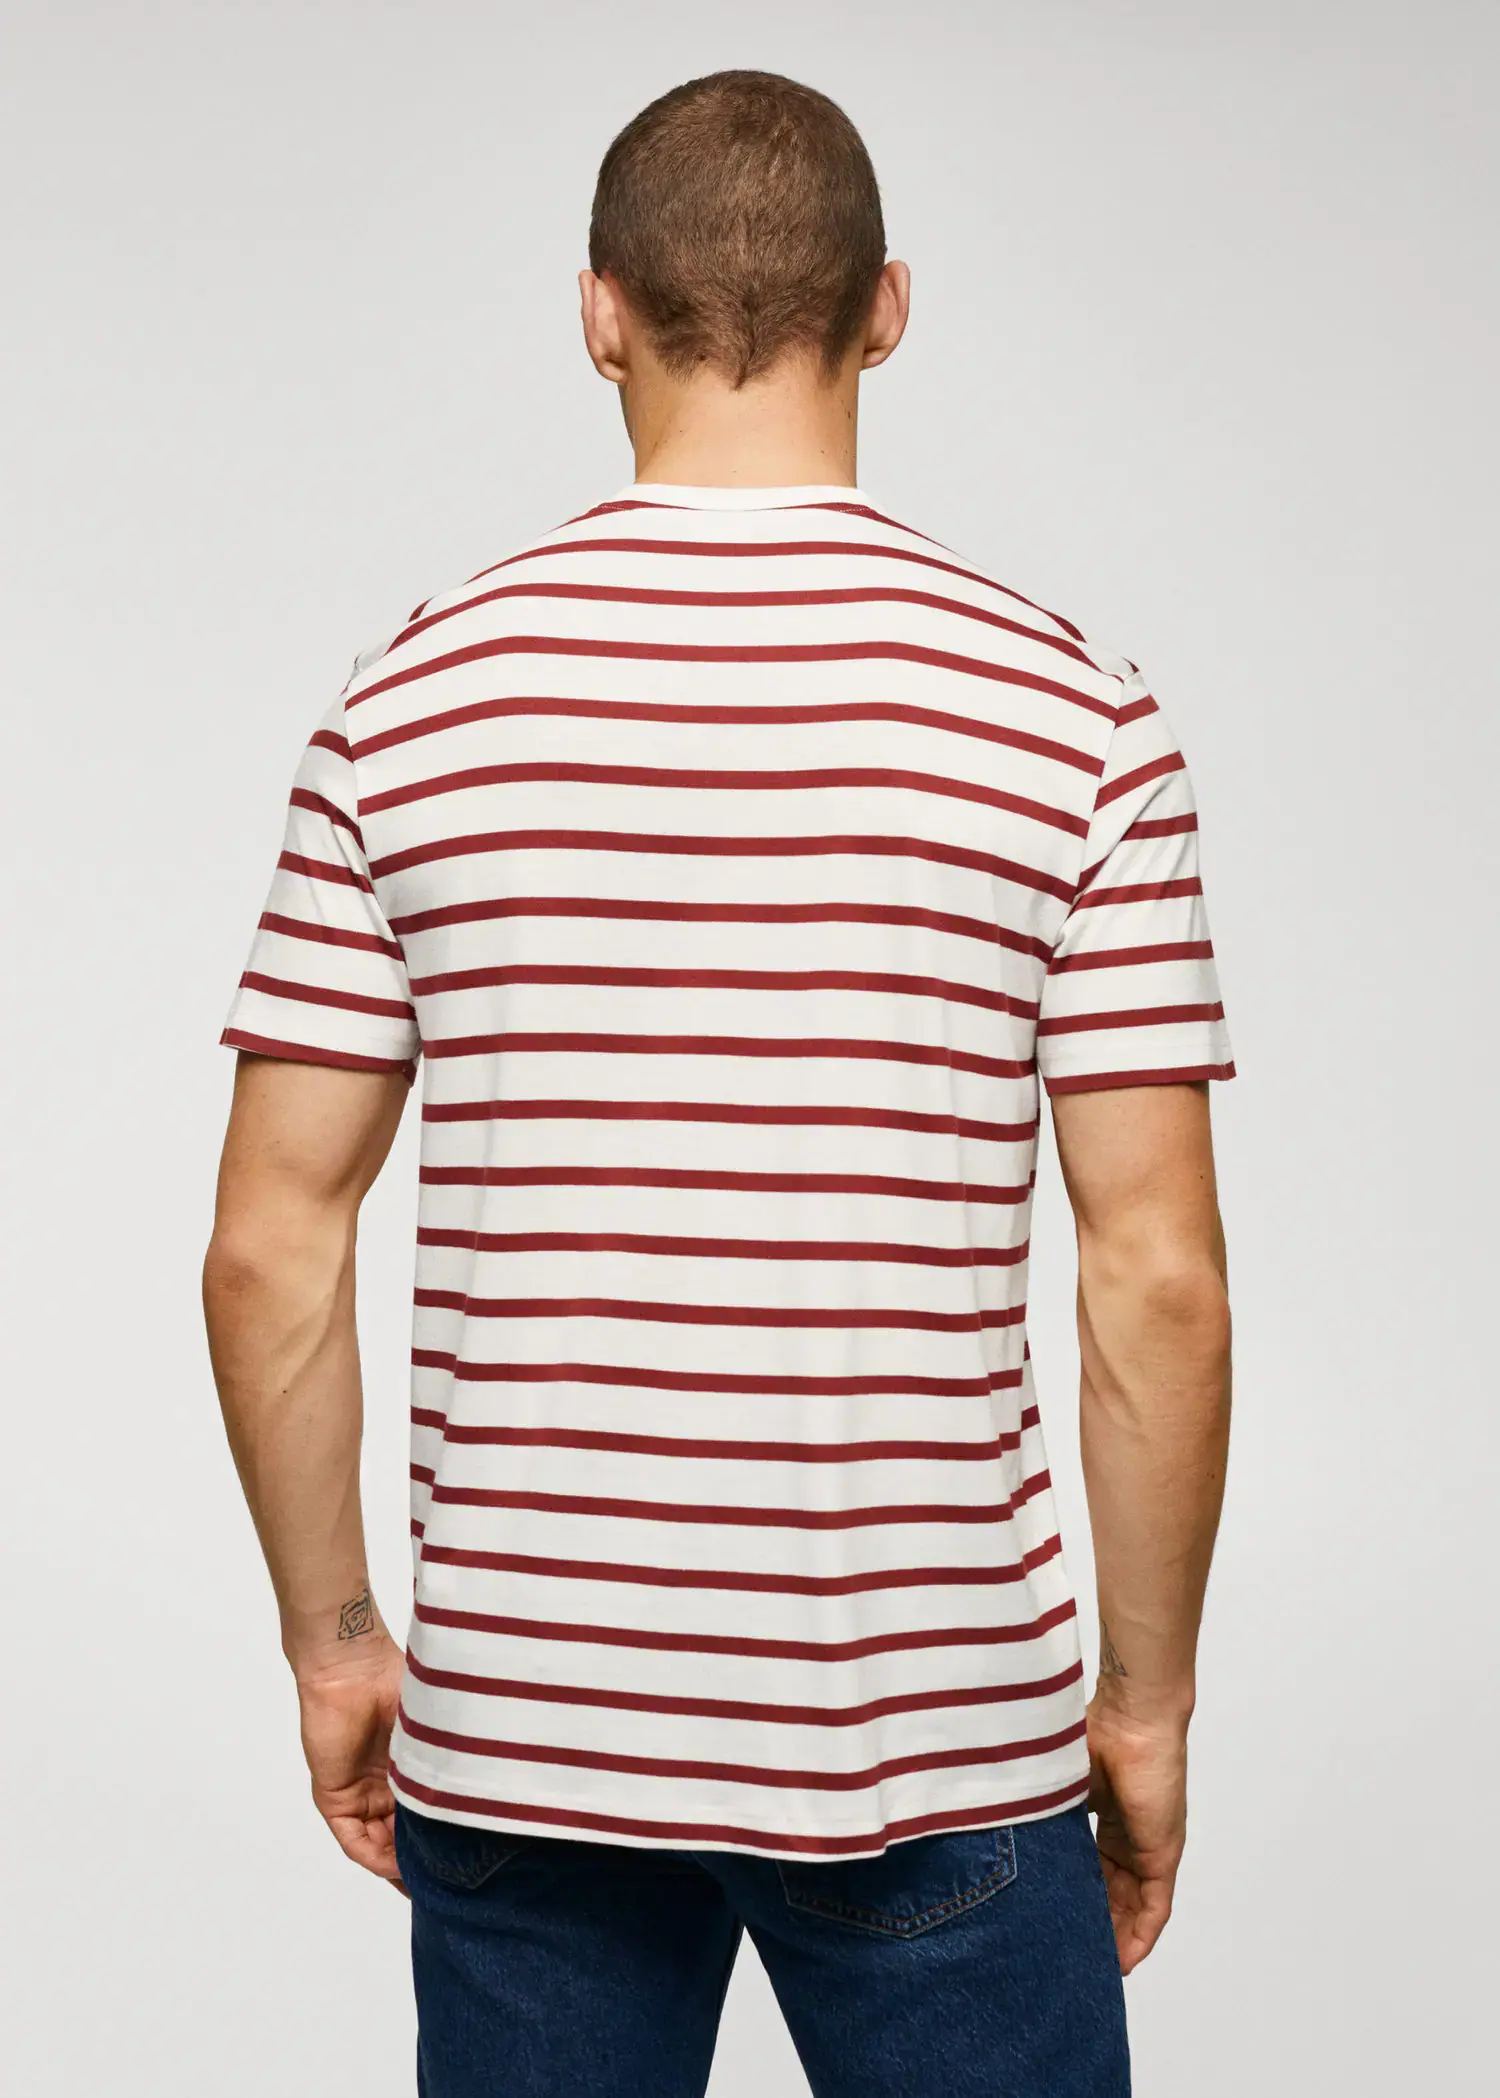 Mango Cotton-modal striped t-shirt. a man in a striped shirt is looking down. 